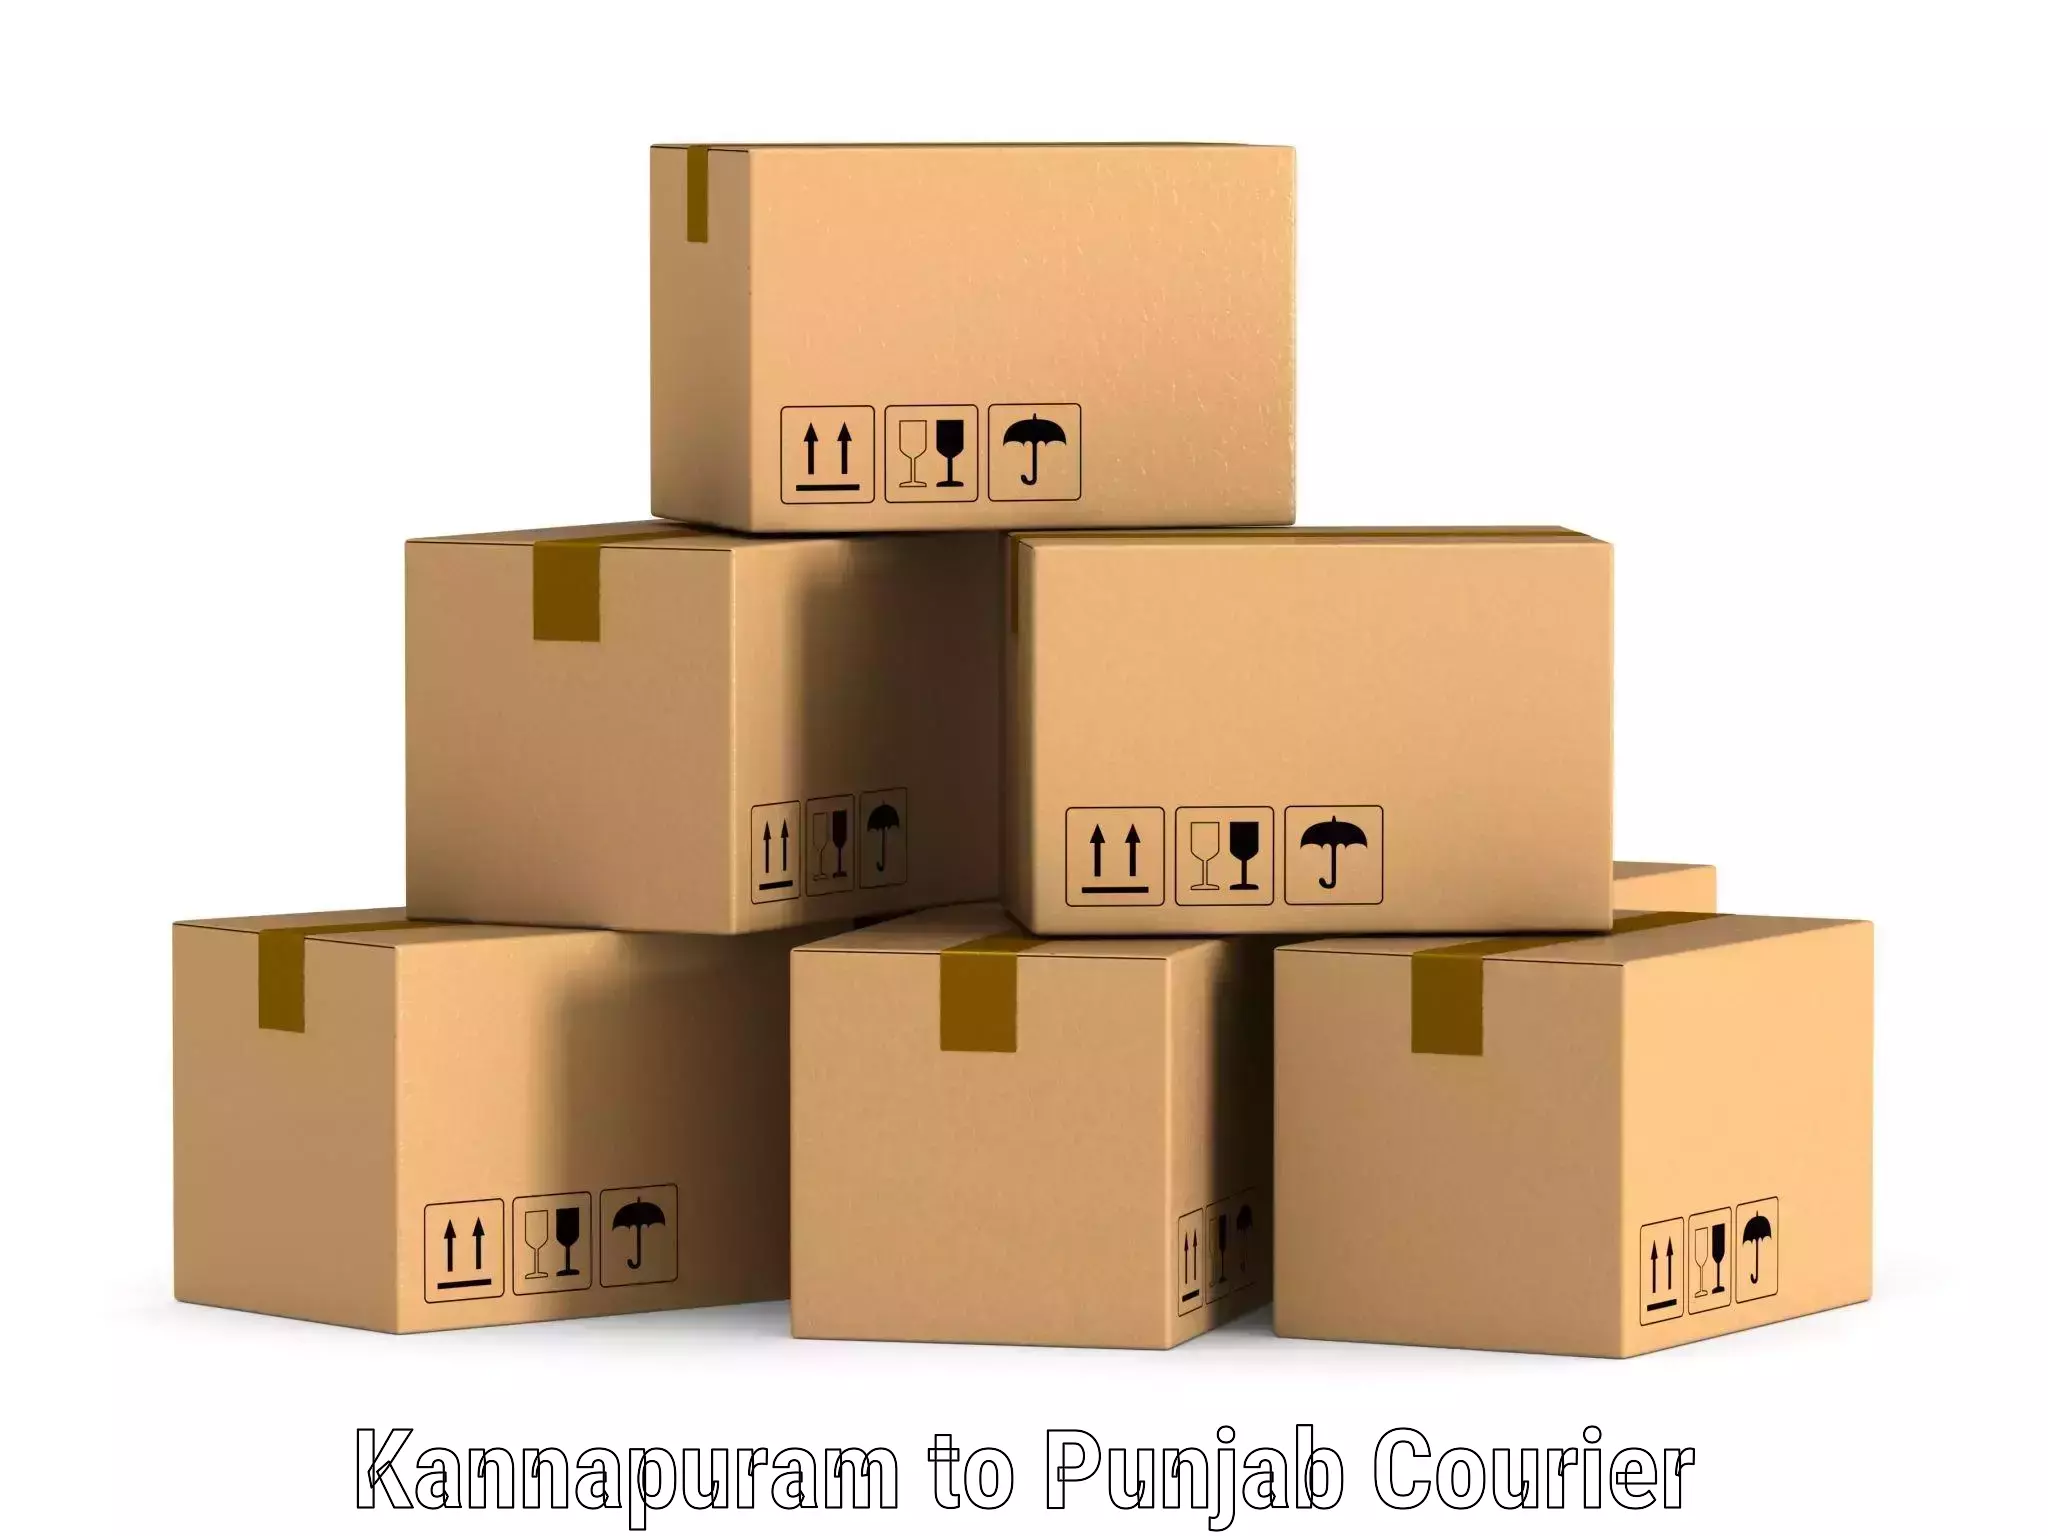 Express mail solutions Kannapuram to Ludhiana